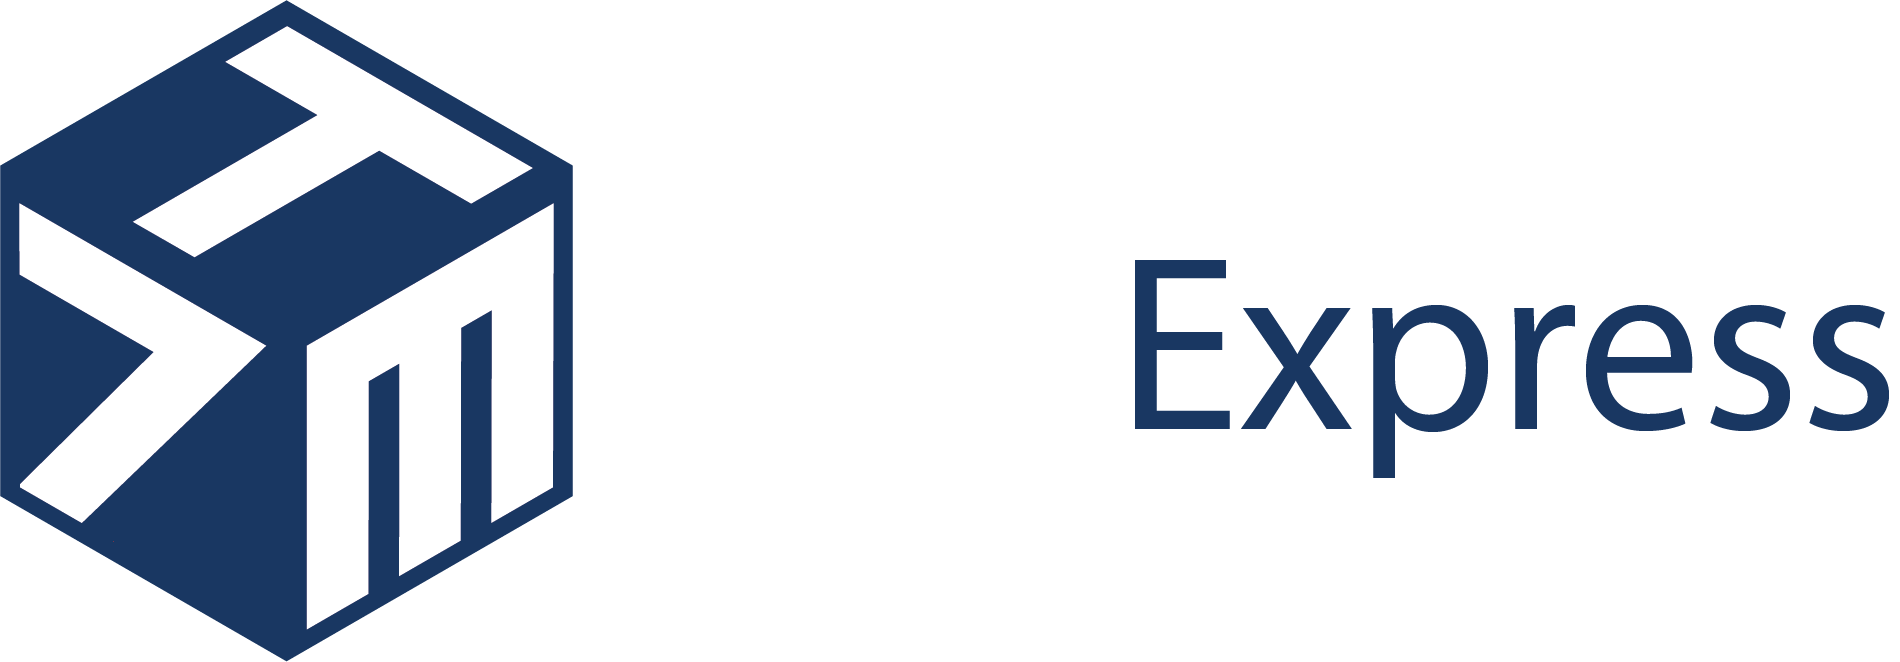 7TonExpress